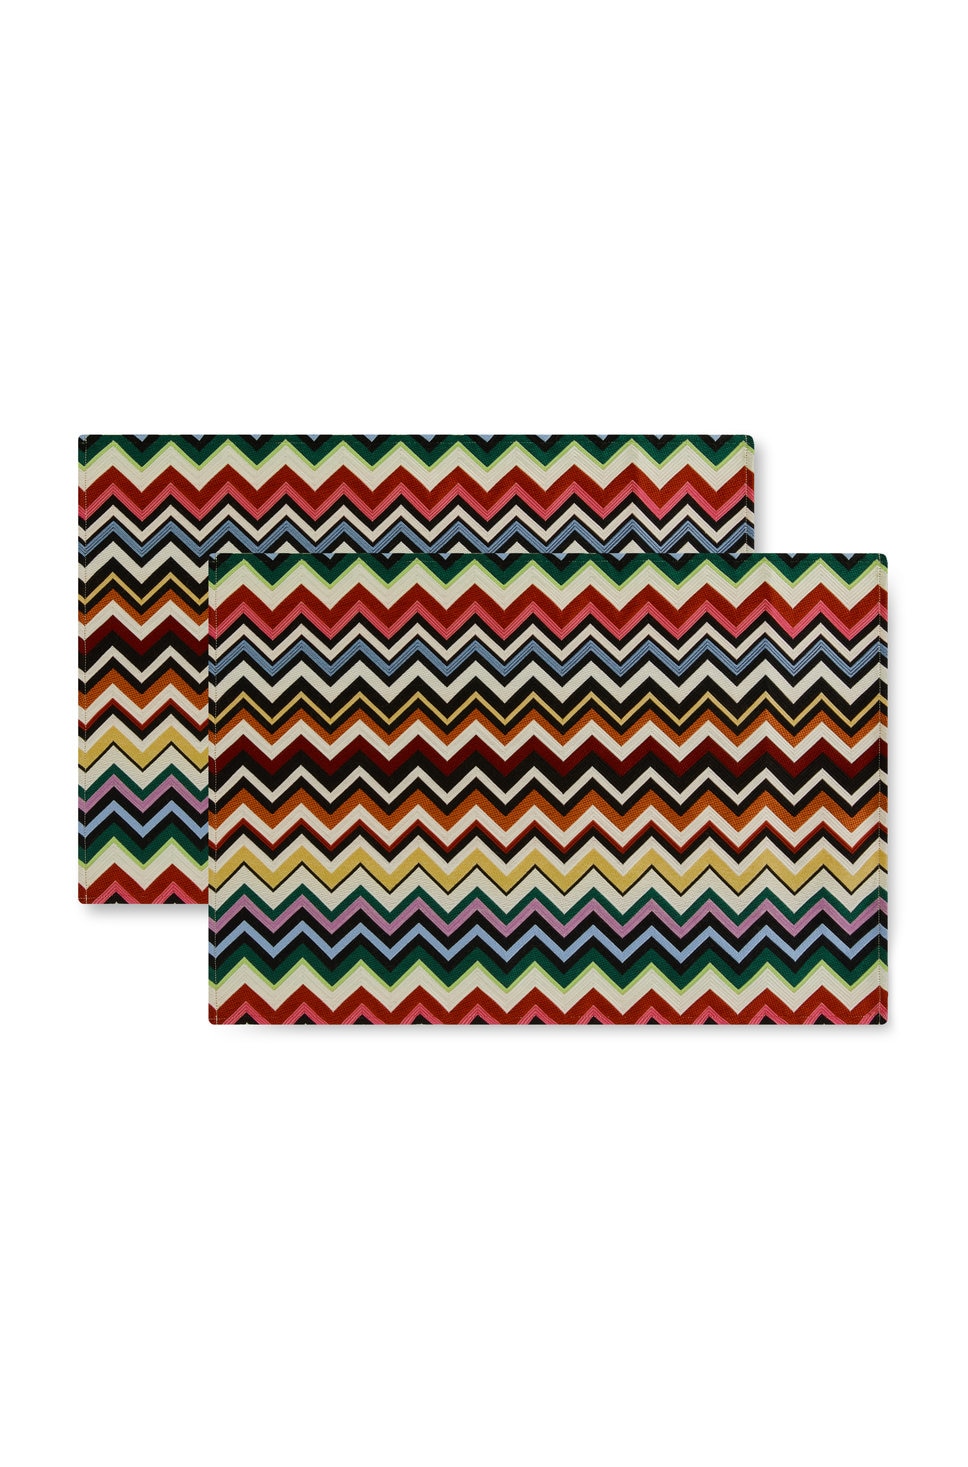 Pair of Belfast placemats 38x52 cm, Multicoloured  - 8051275609803 - 1